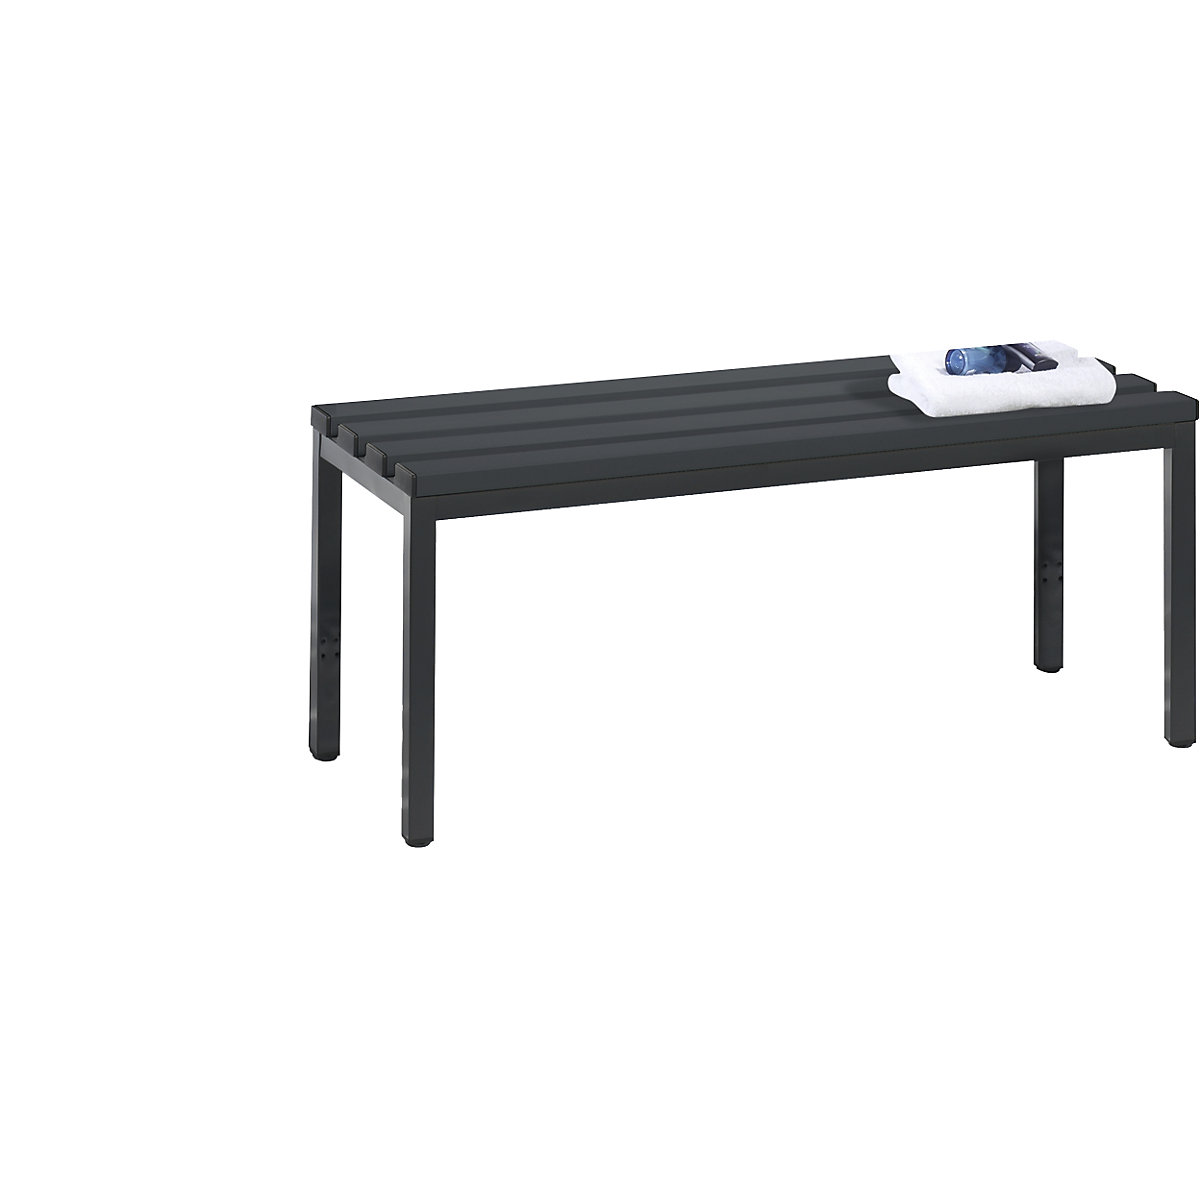 BASIC cloakroom bench – C+P, plastic, length 1000 mm, black grey-4